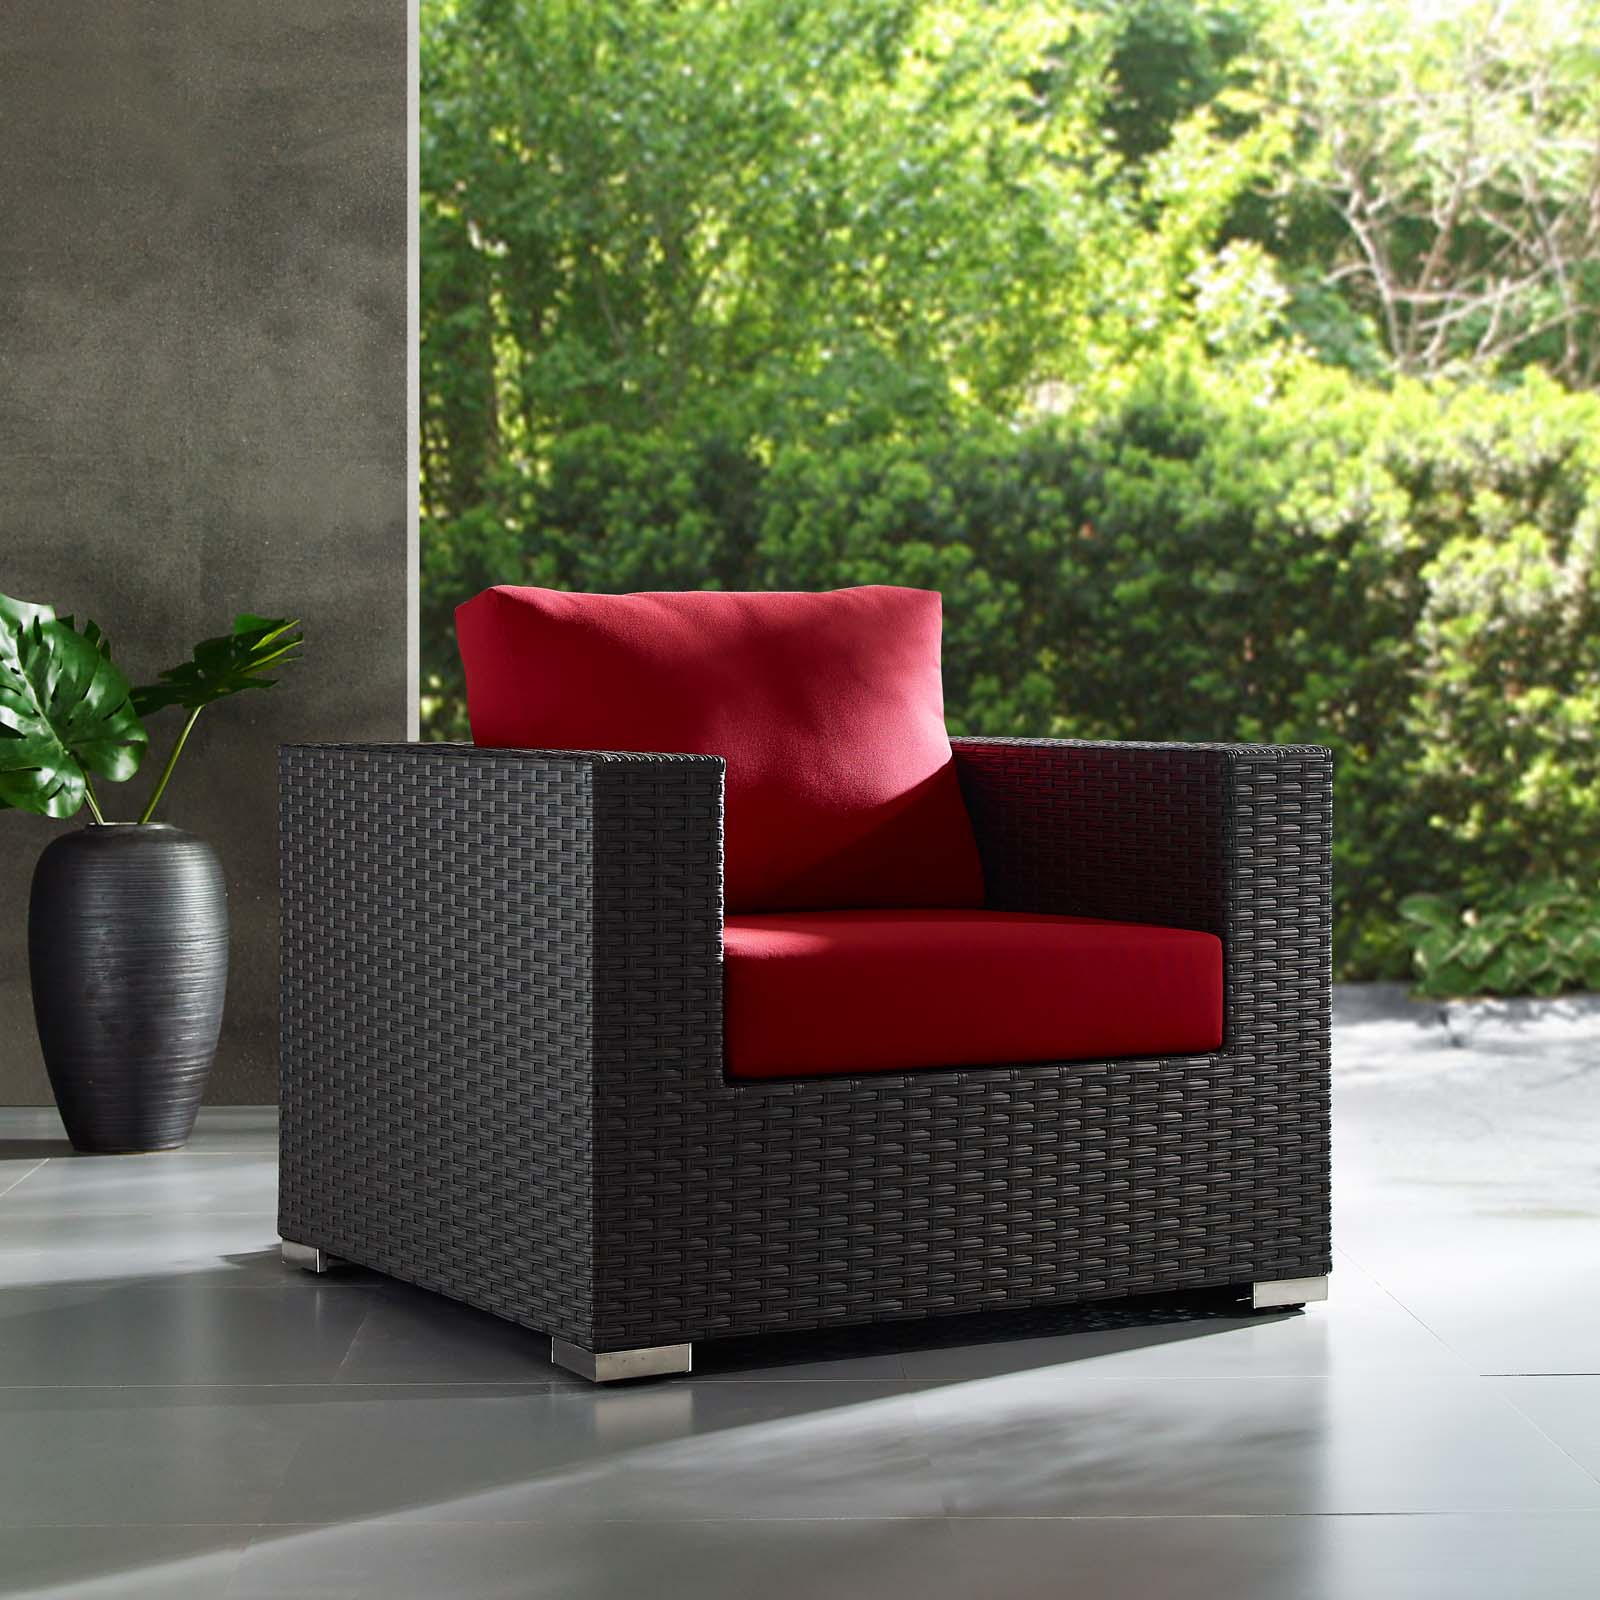 Modern Contemporary Urban Design Outdoor Patio Balcony Garden Furniture Lounge Chair Armchair, Sunbrella Rattan Wicker, Red - image 4 of 4